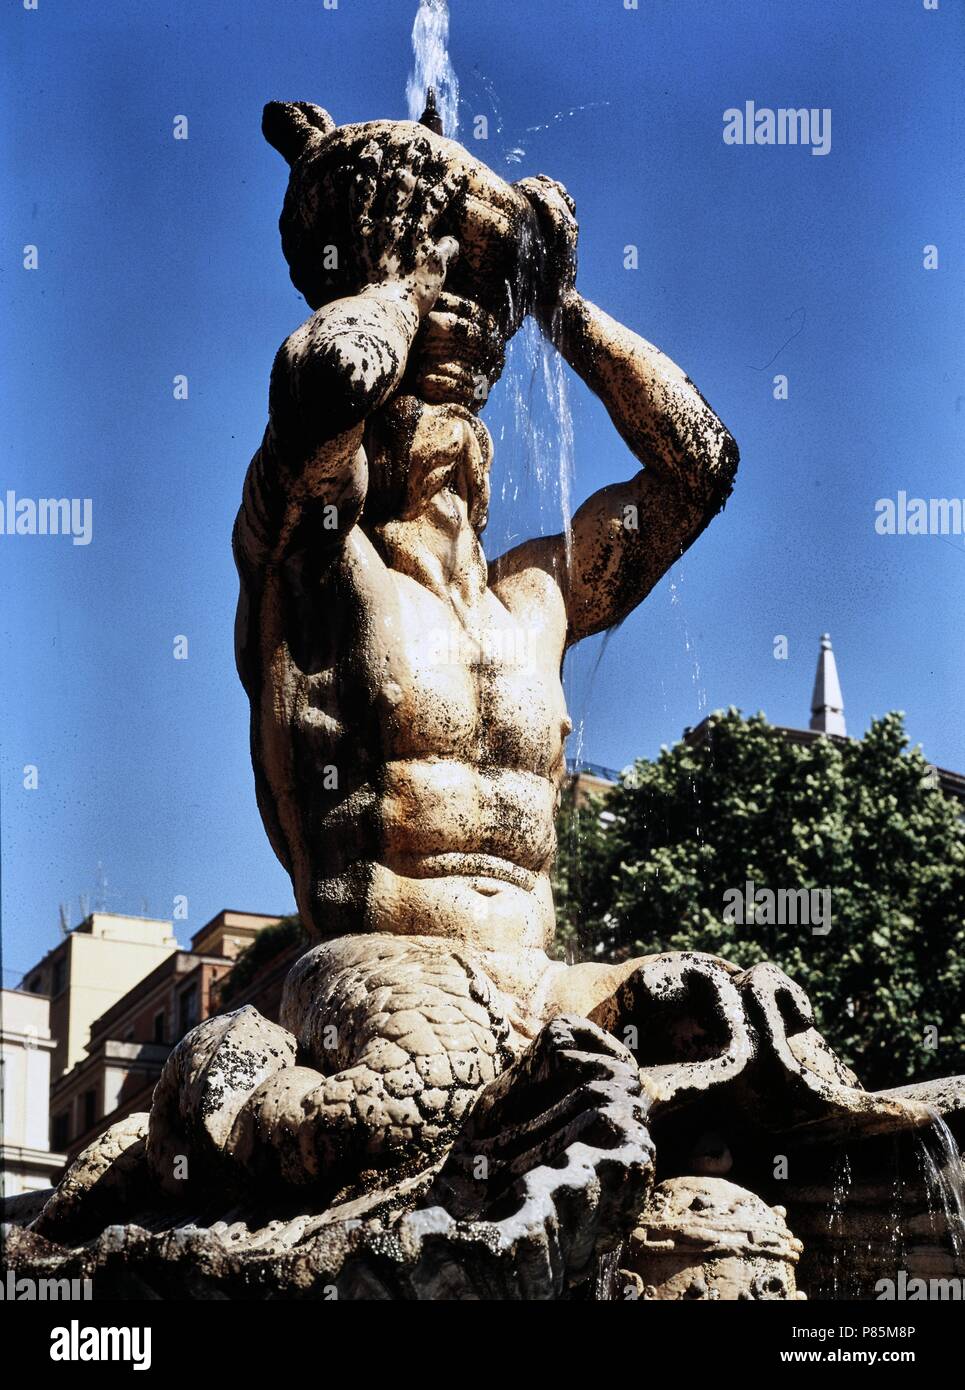 Detalle del Tritón en la Fuente del mismo nombre. Plaza Barberini, Roma. Stock Photo